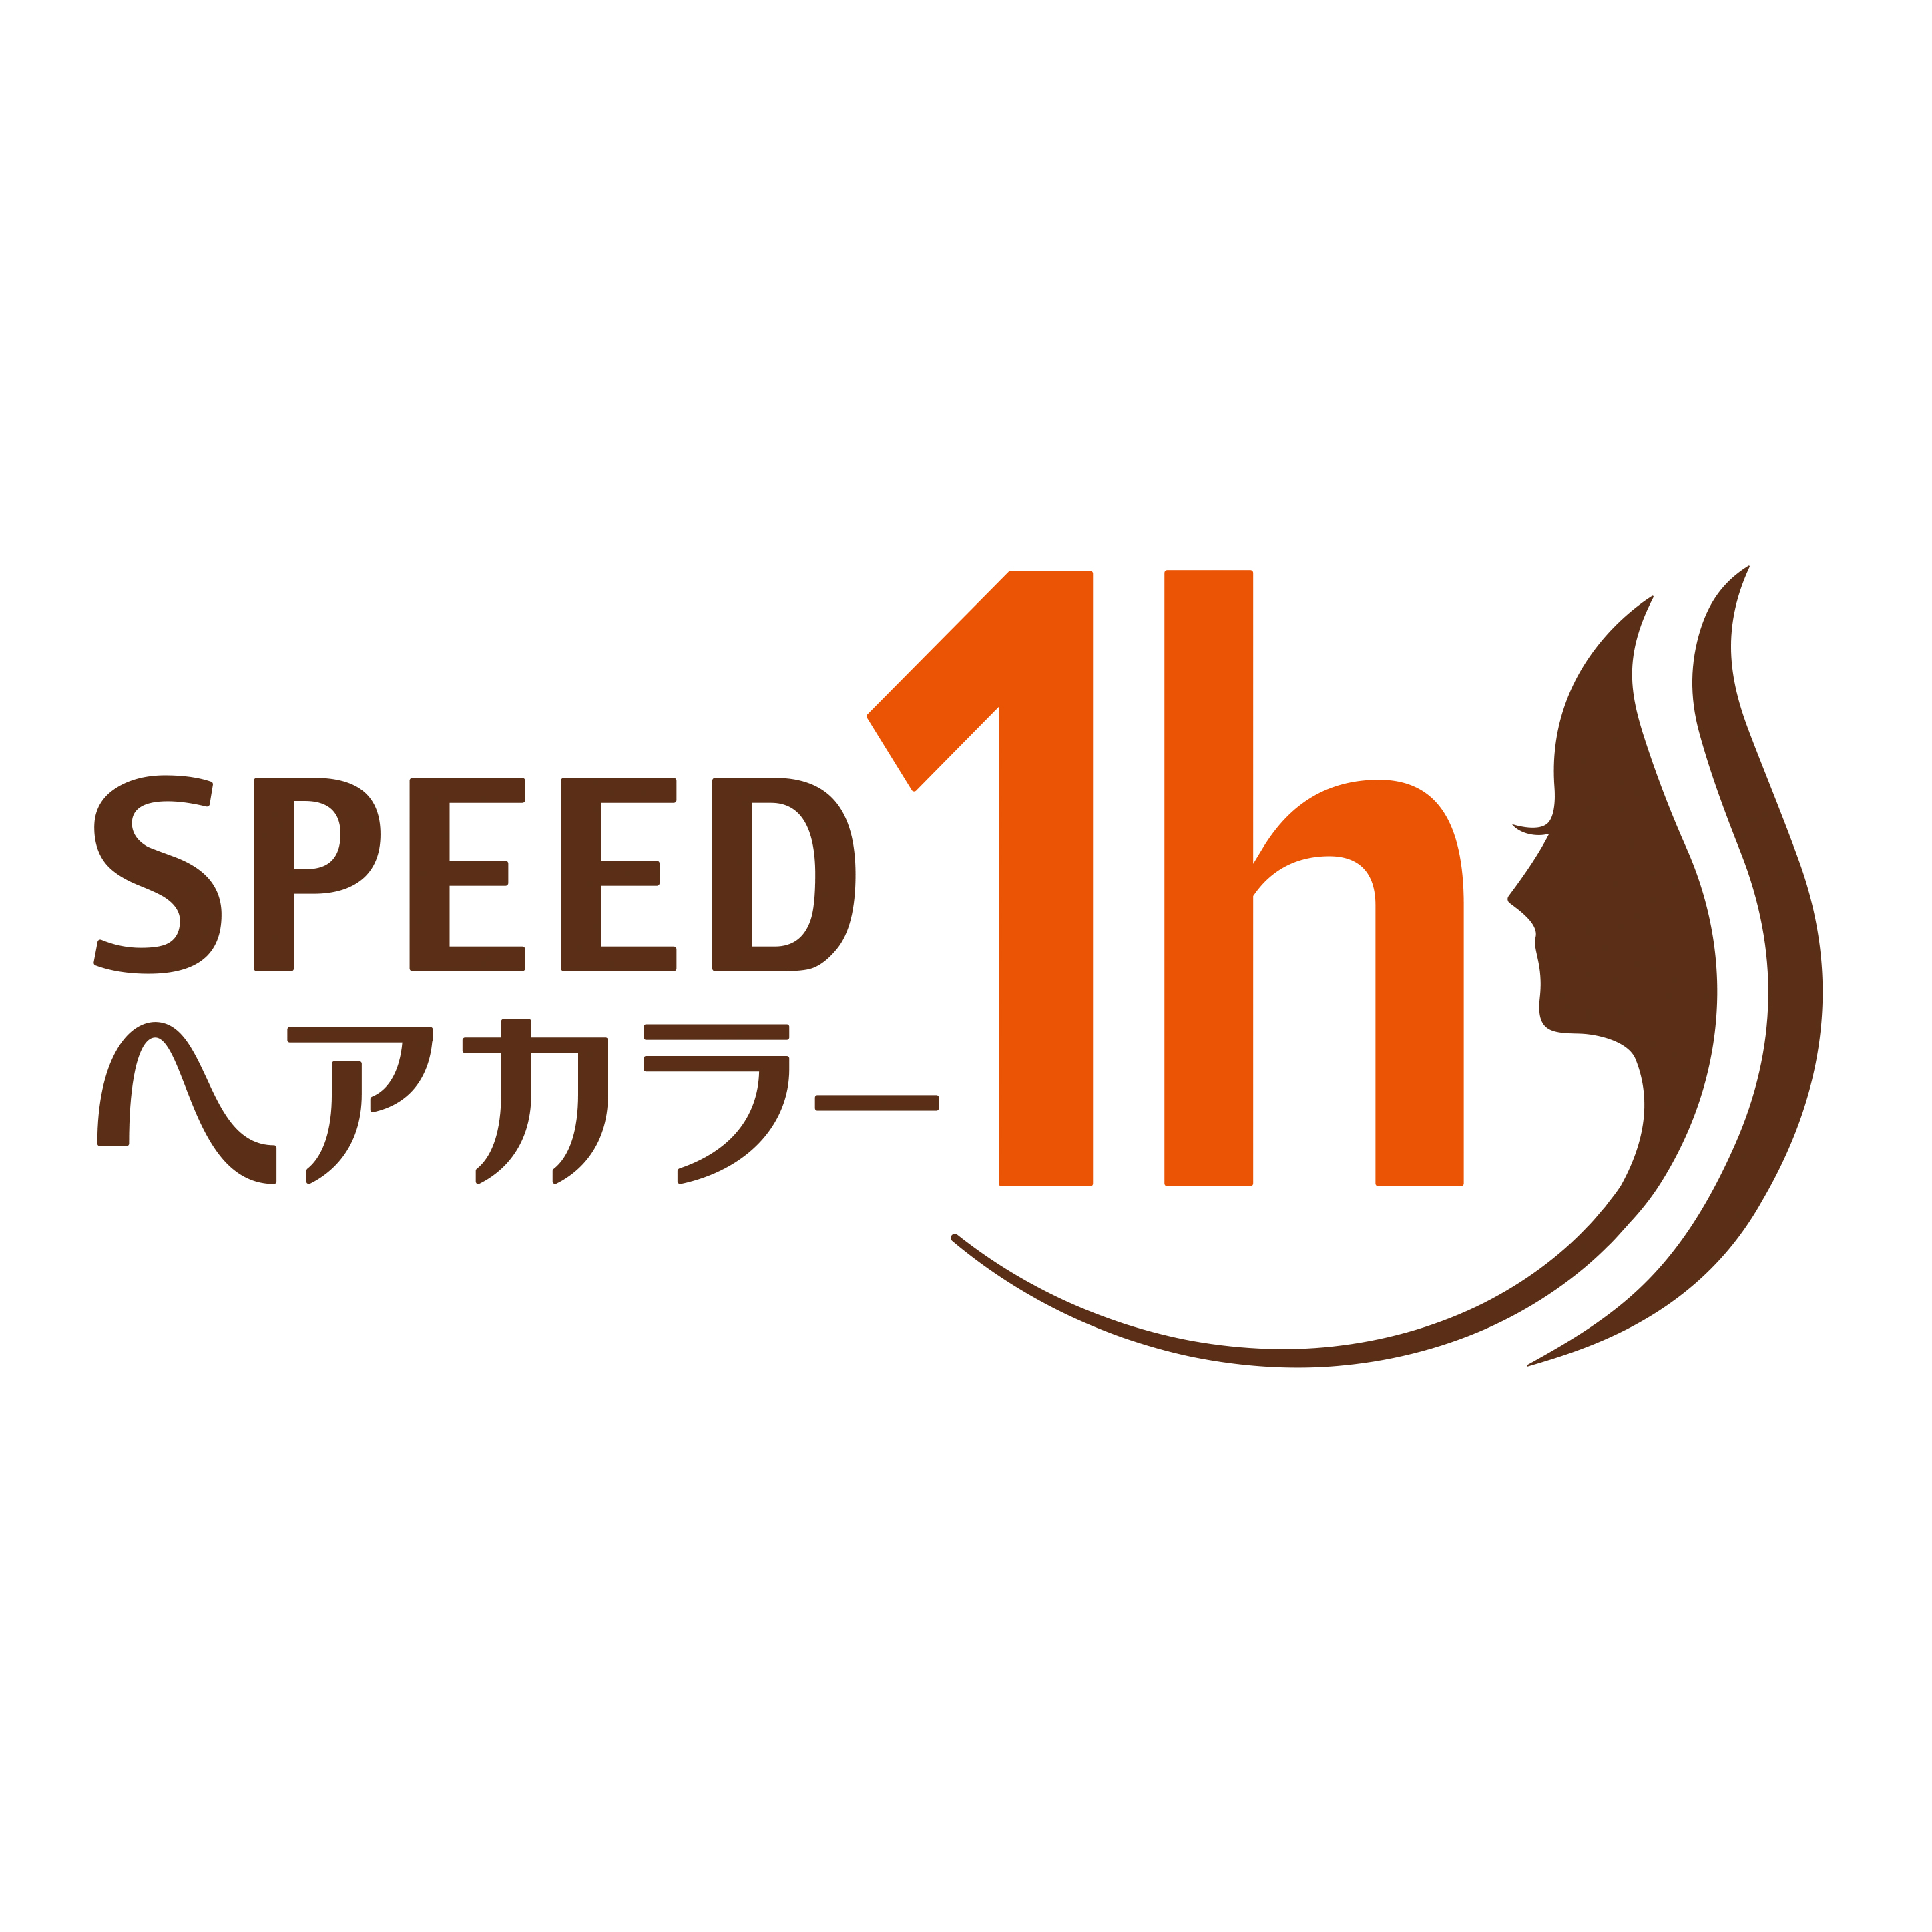 Speed ヘアカラー 1h 福岡県 久留米市国分町 詳細 人気店予約サイト Eparkファスパ